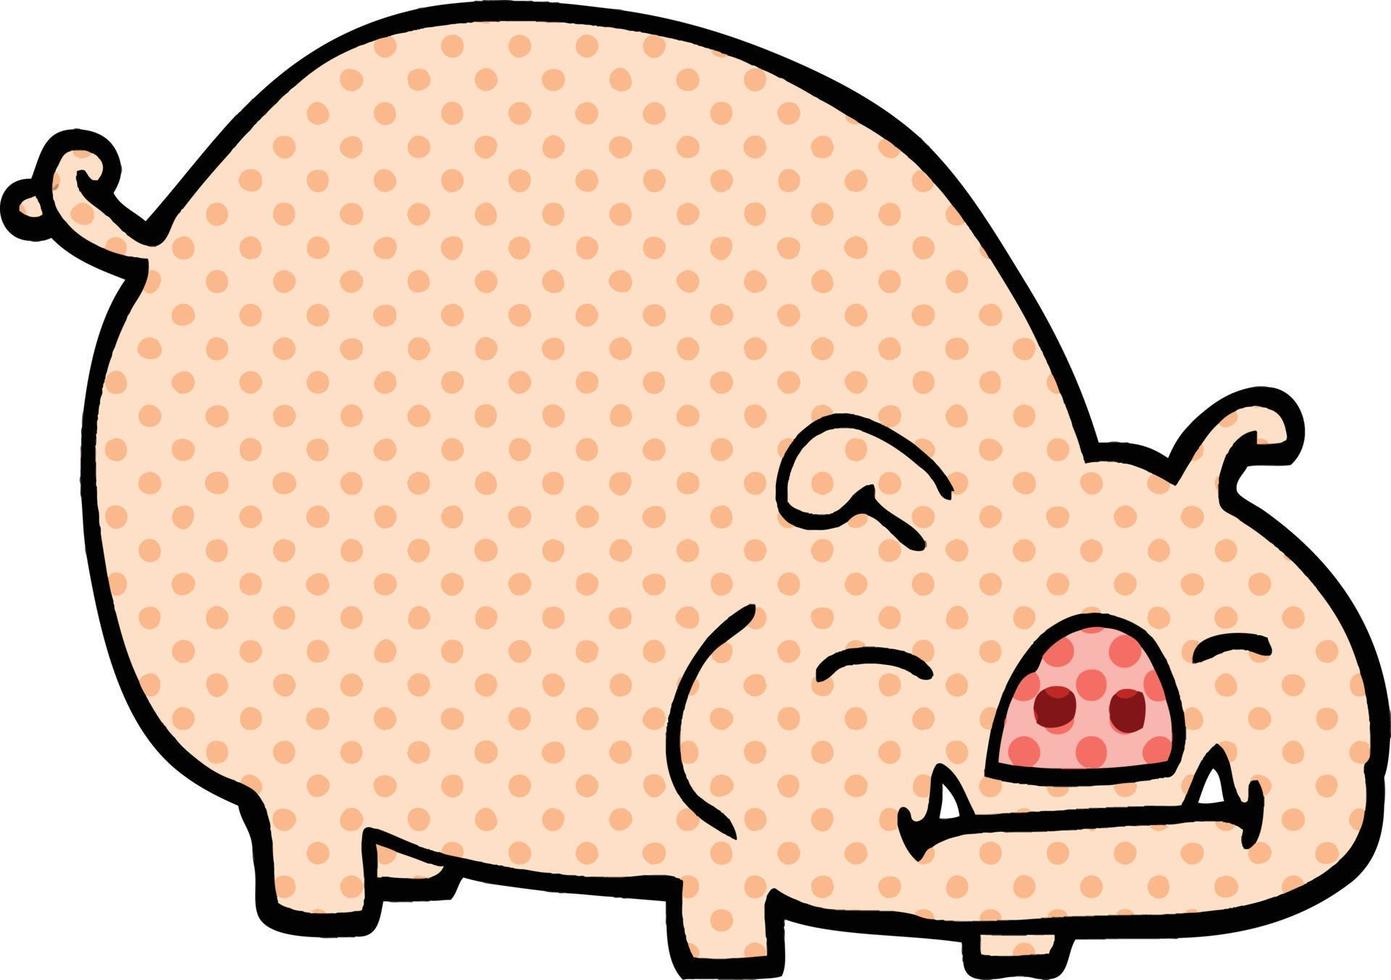 comic book style cartoon pig vector